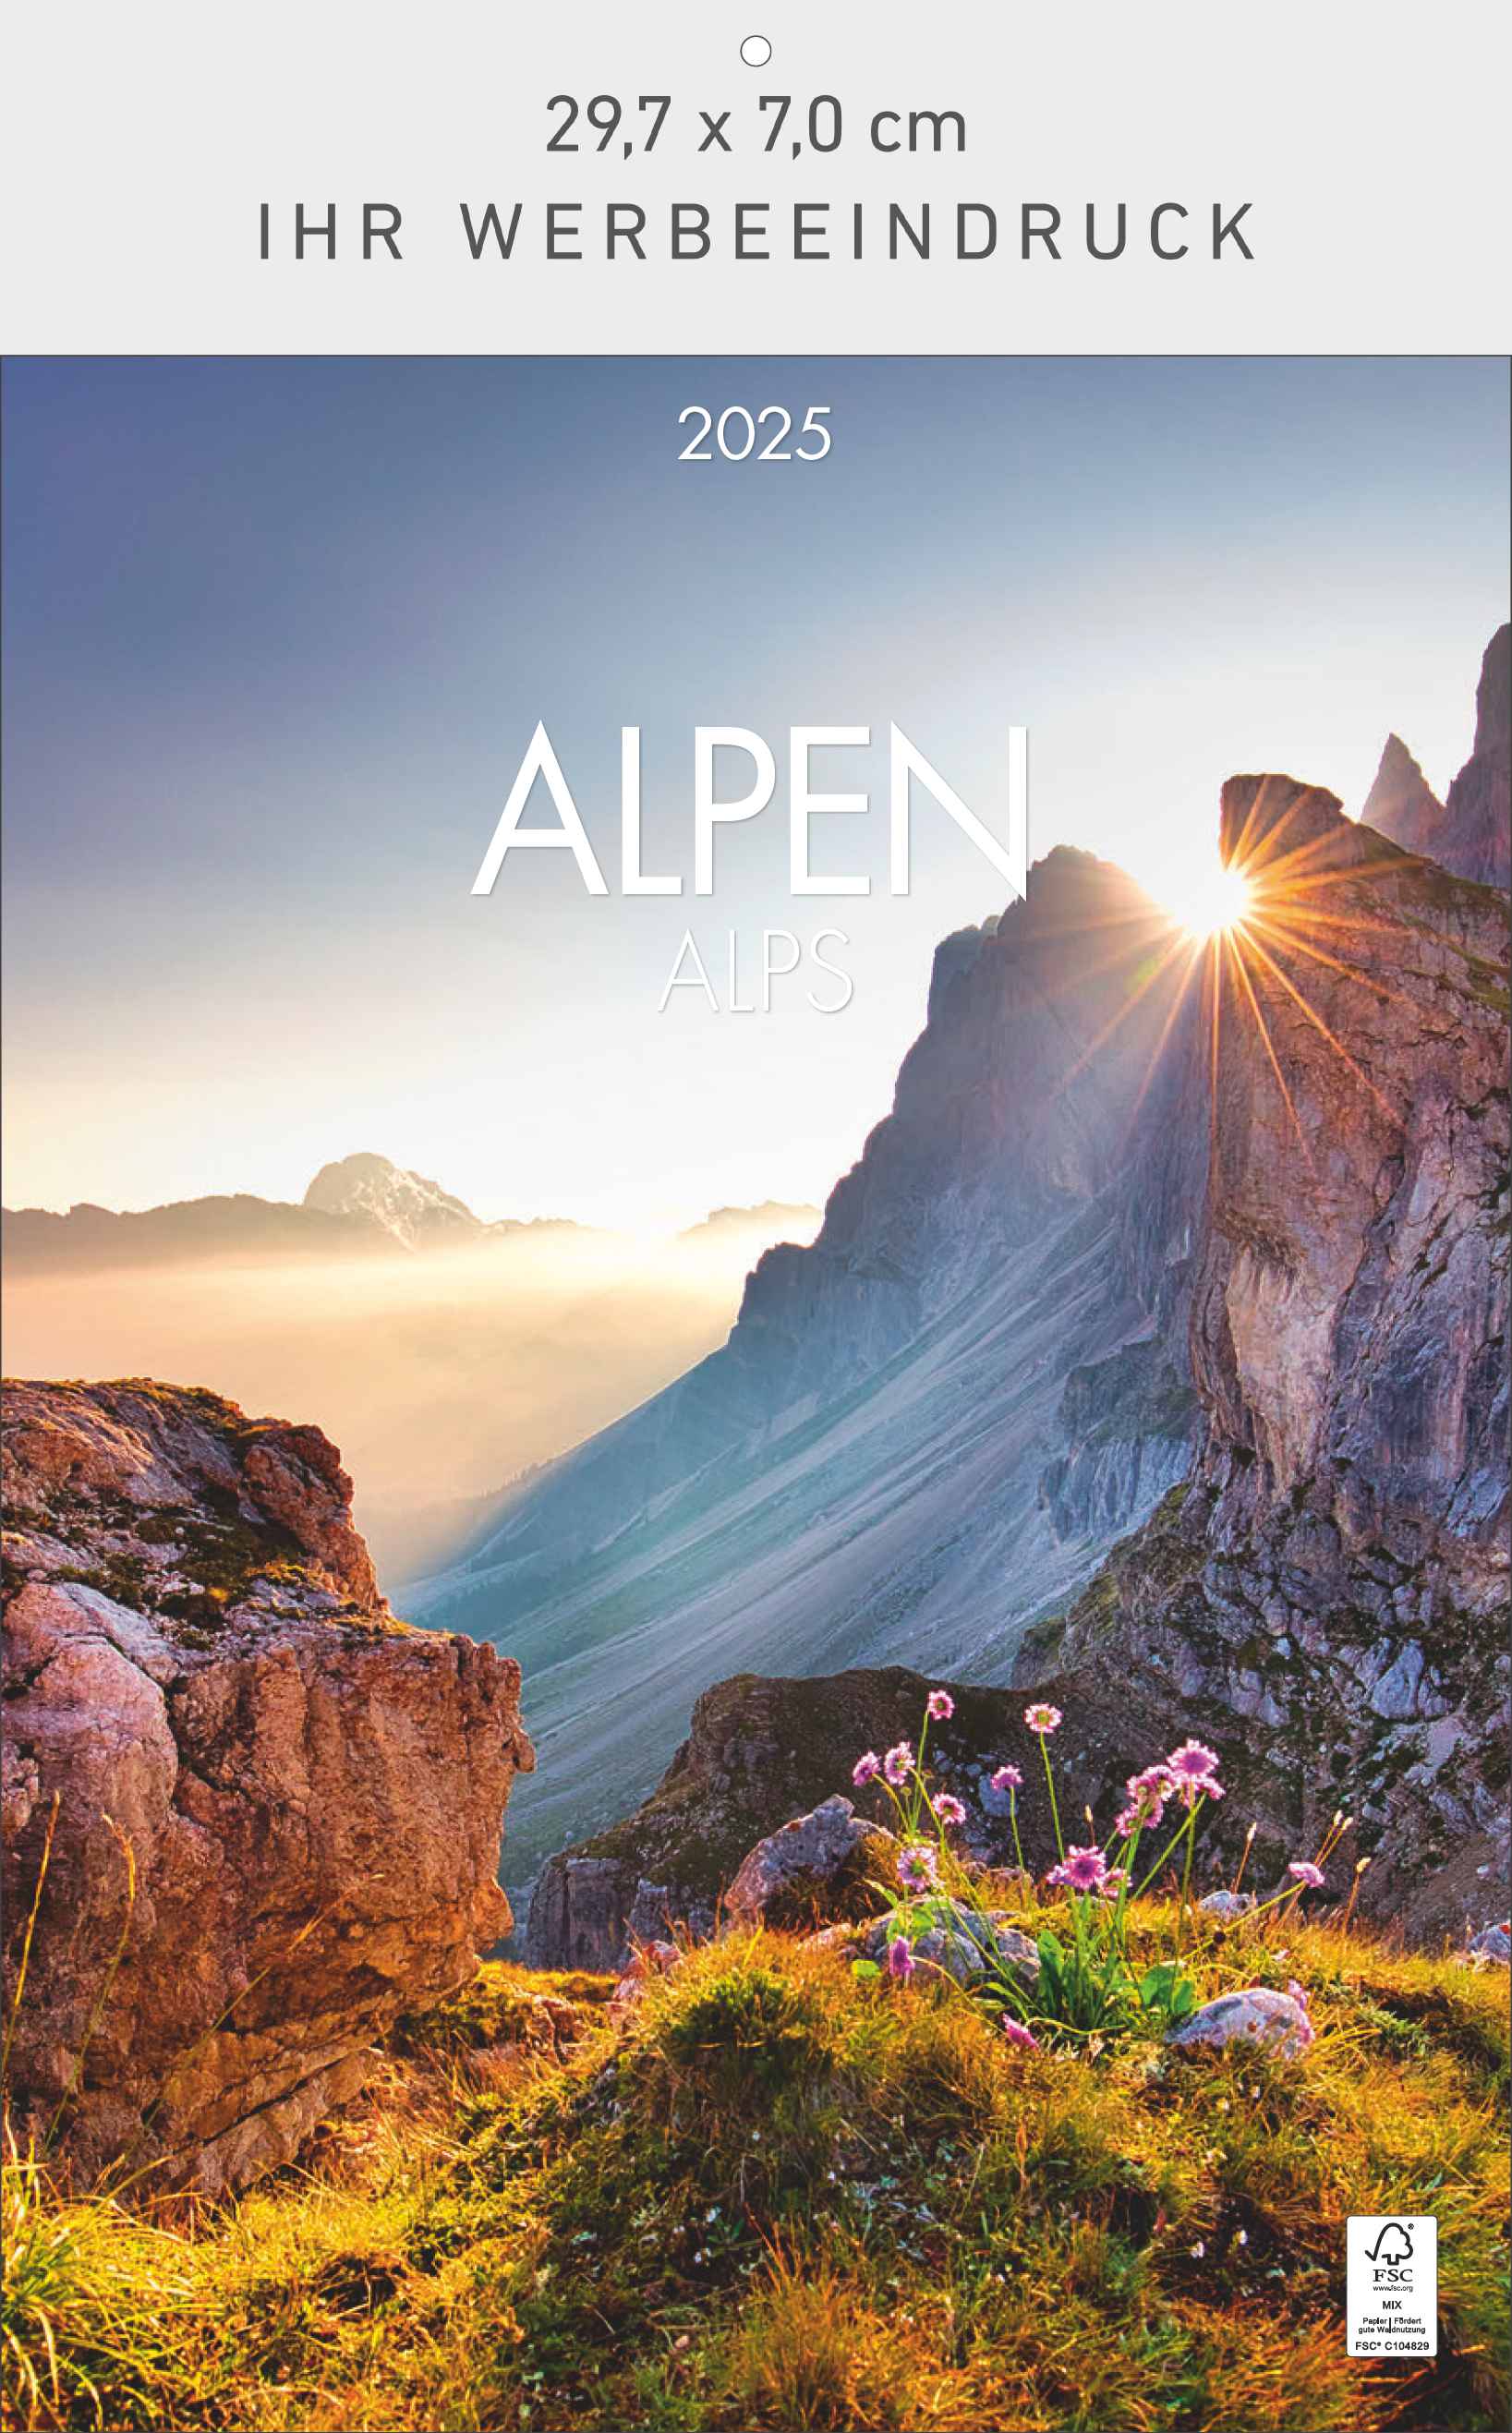 Alpen - Alps